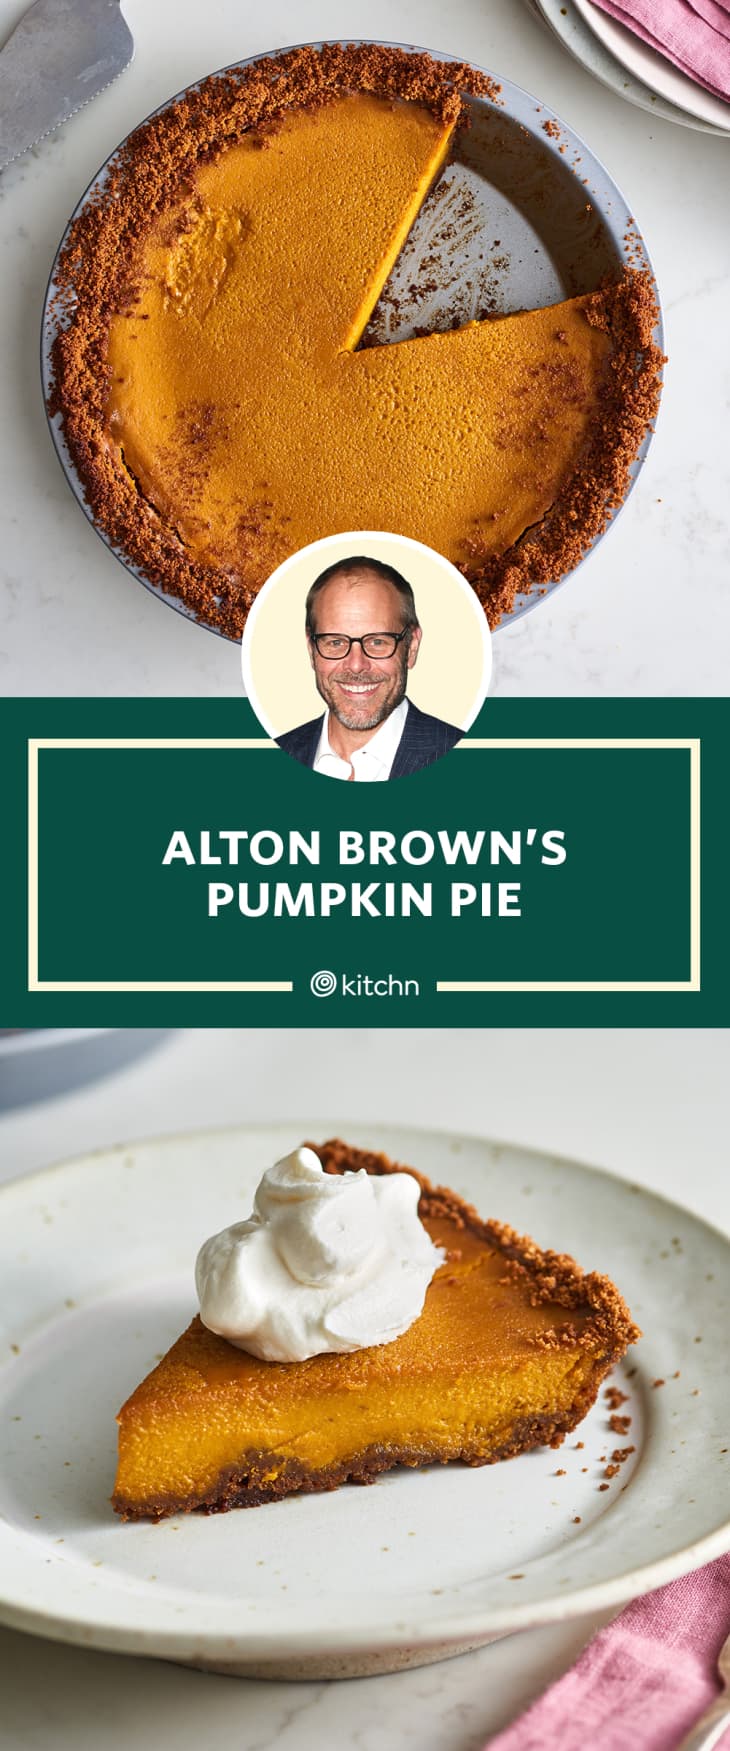 I Tried Alton Brown's Pumpkin Pie Recipe | The Kitchn